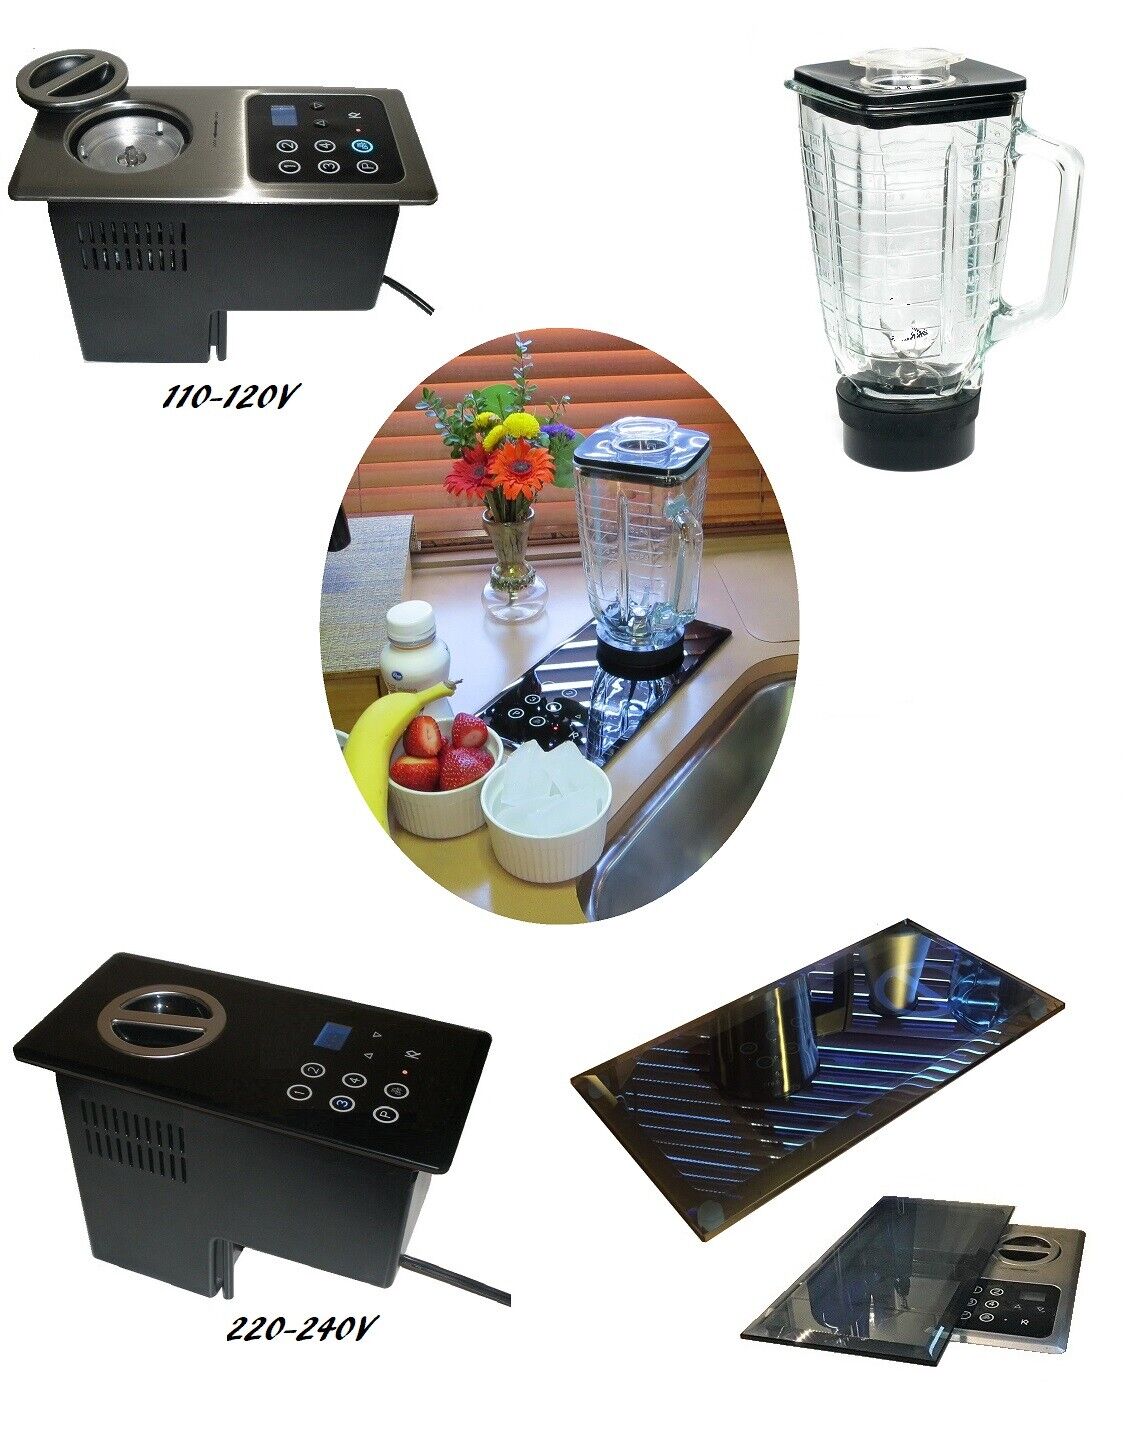 In Counter Blender Drop-in Motor Runs 6 cup glass blender + 4 more appliances